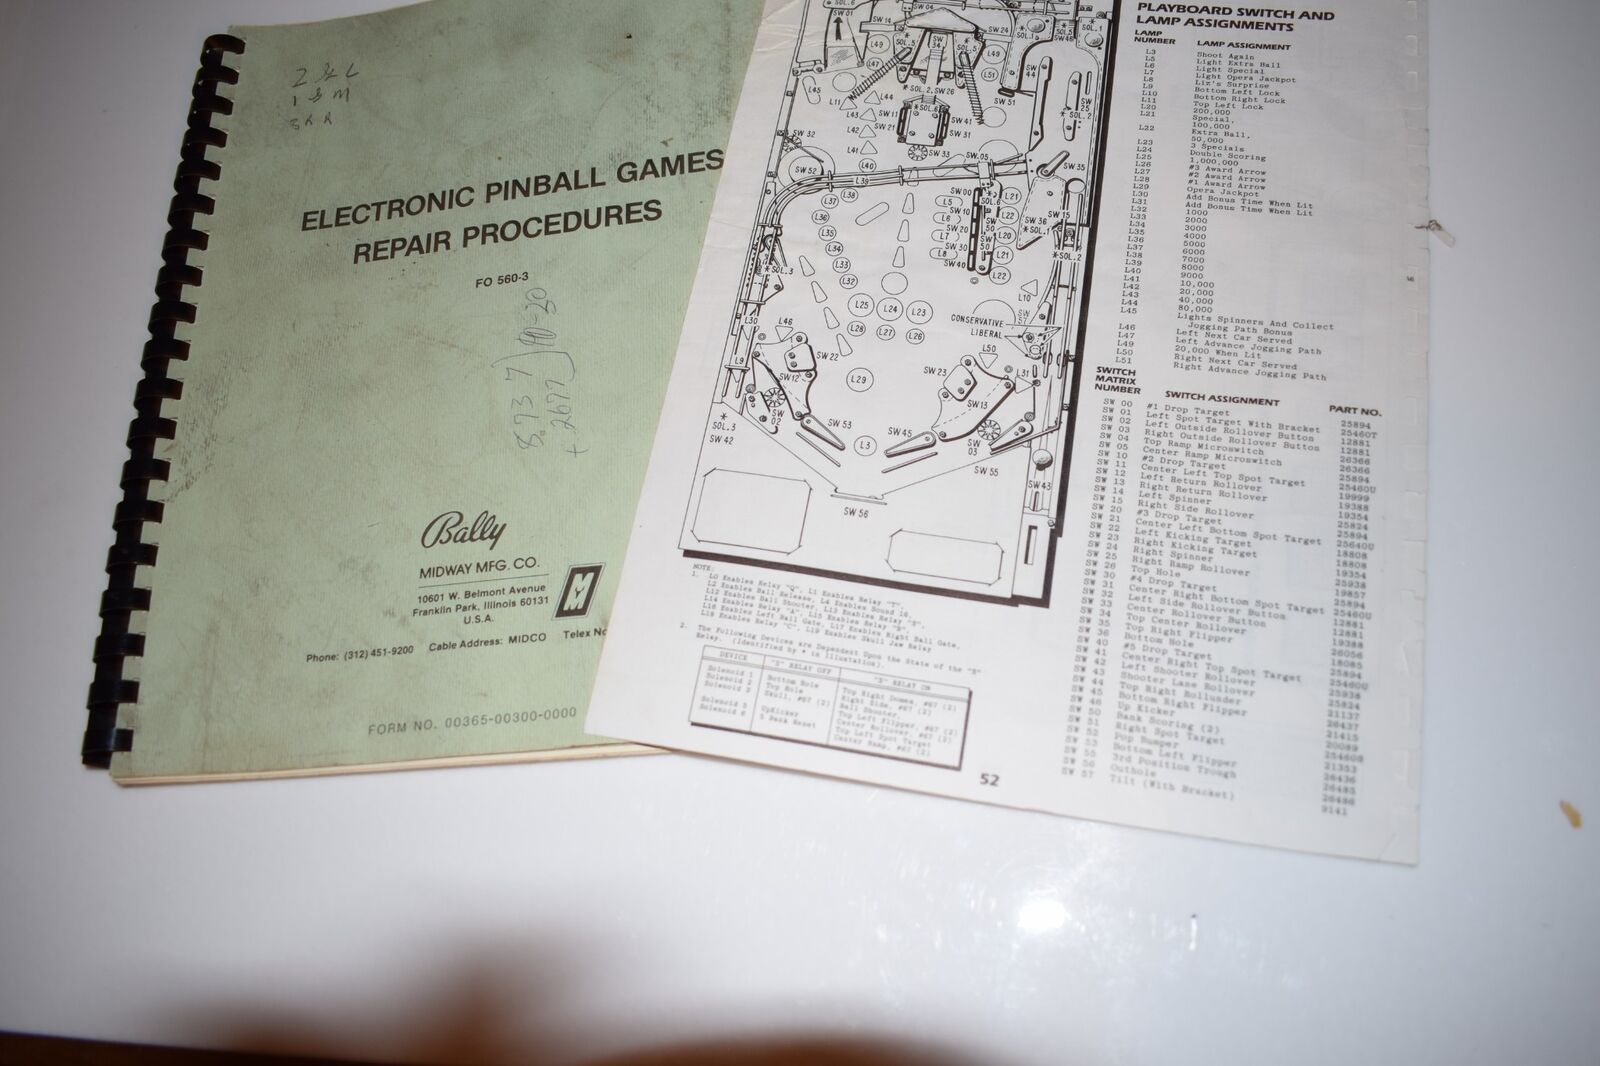 BALLY MIDWAY ELECTRONIC PINBALL GAMES REPAIR PROCEDURES FO 560-3 MANUAL(BOOK789)